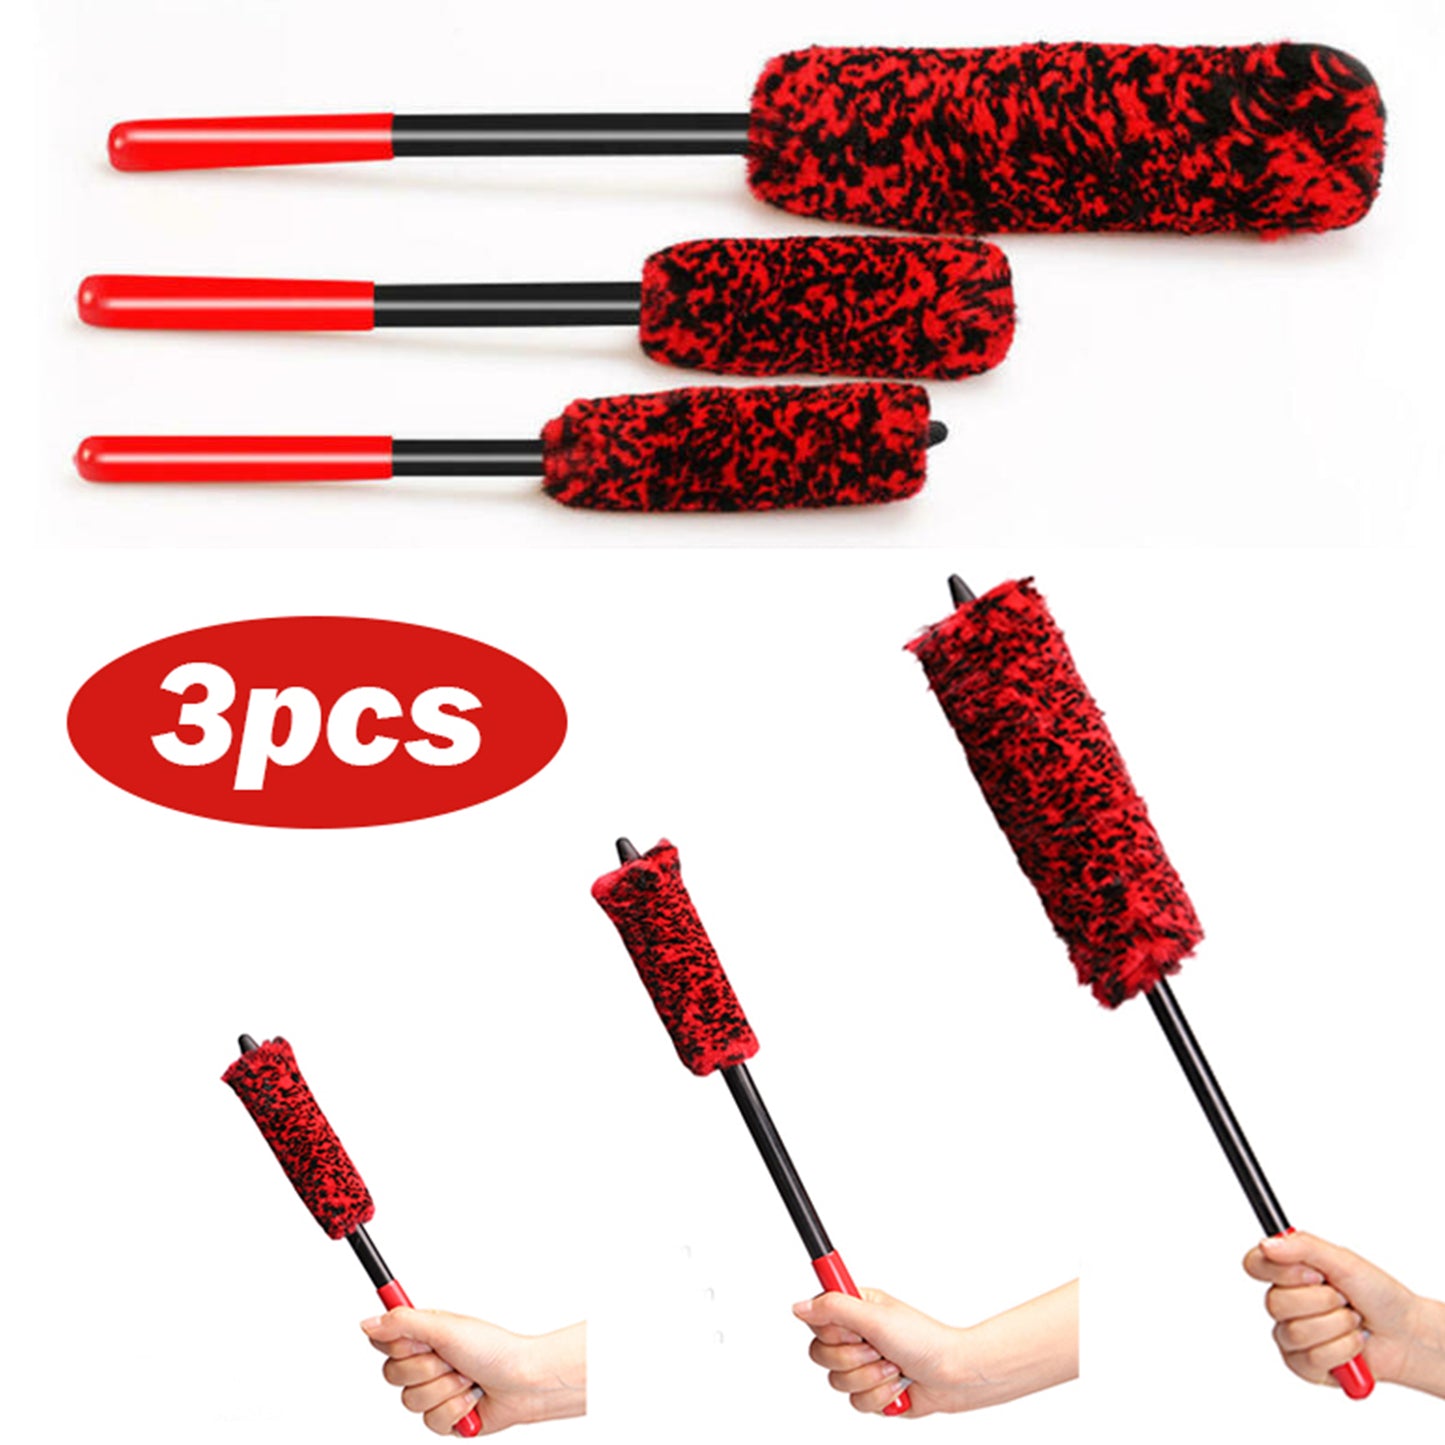 3 PCS Soft Wheel Cleaning Brush